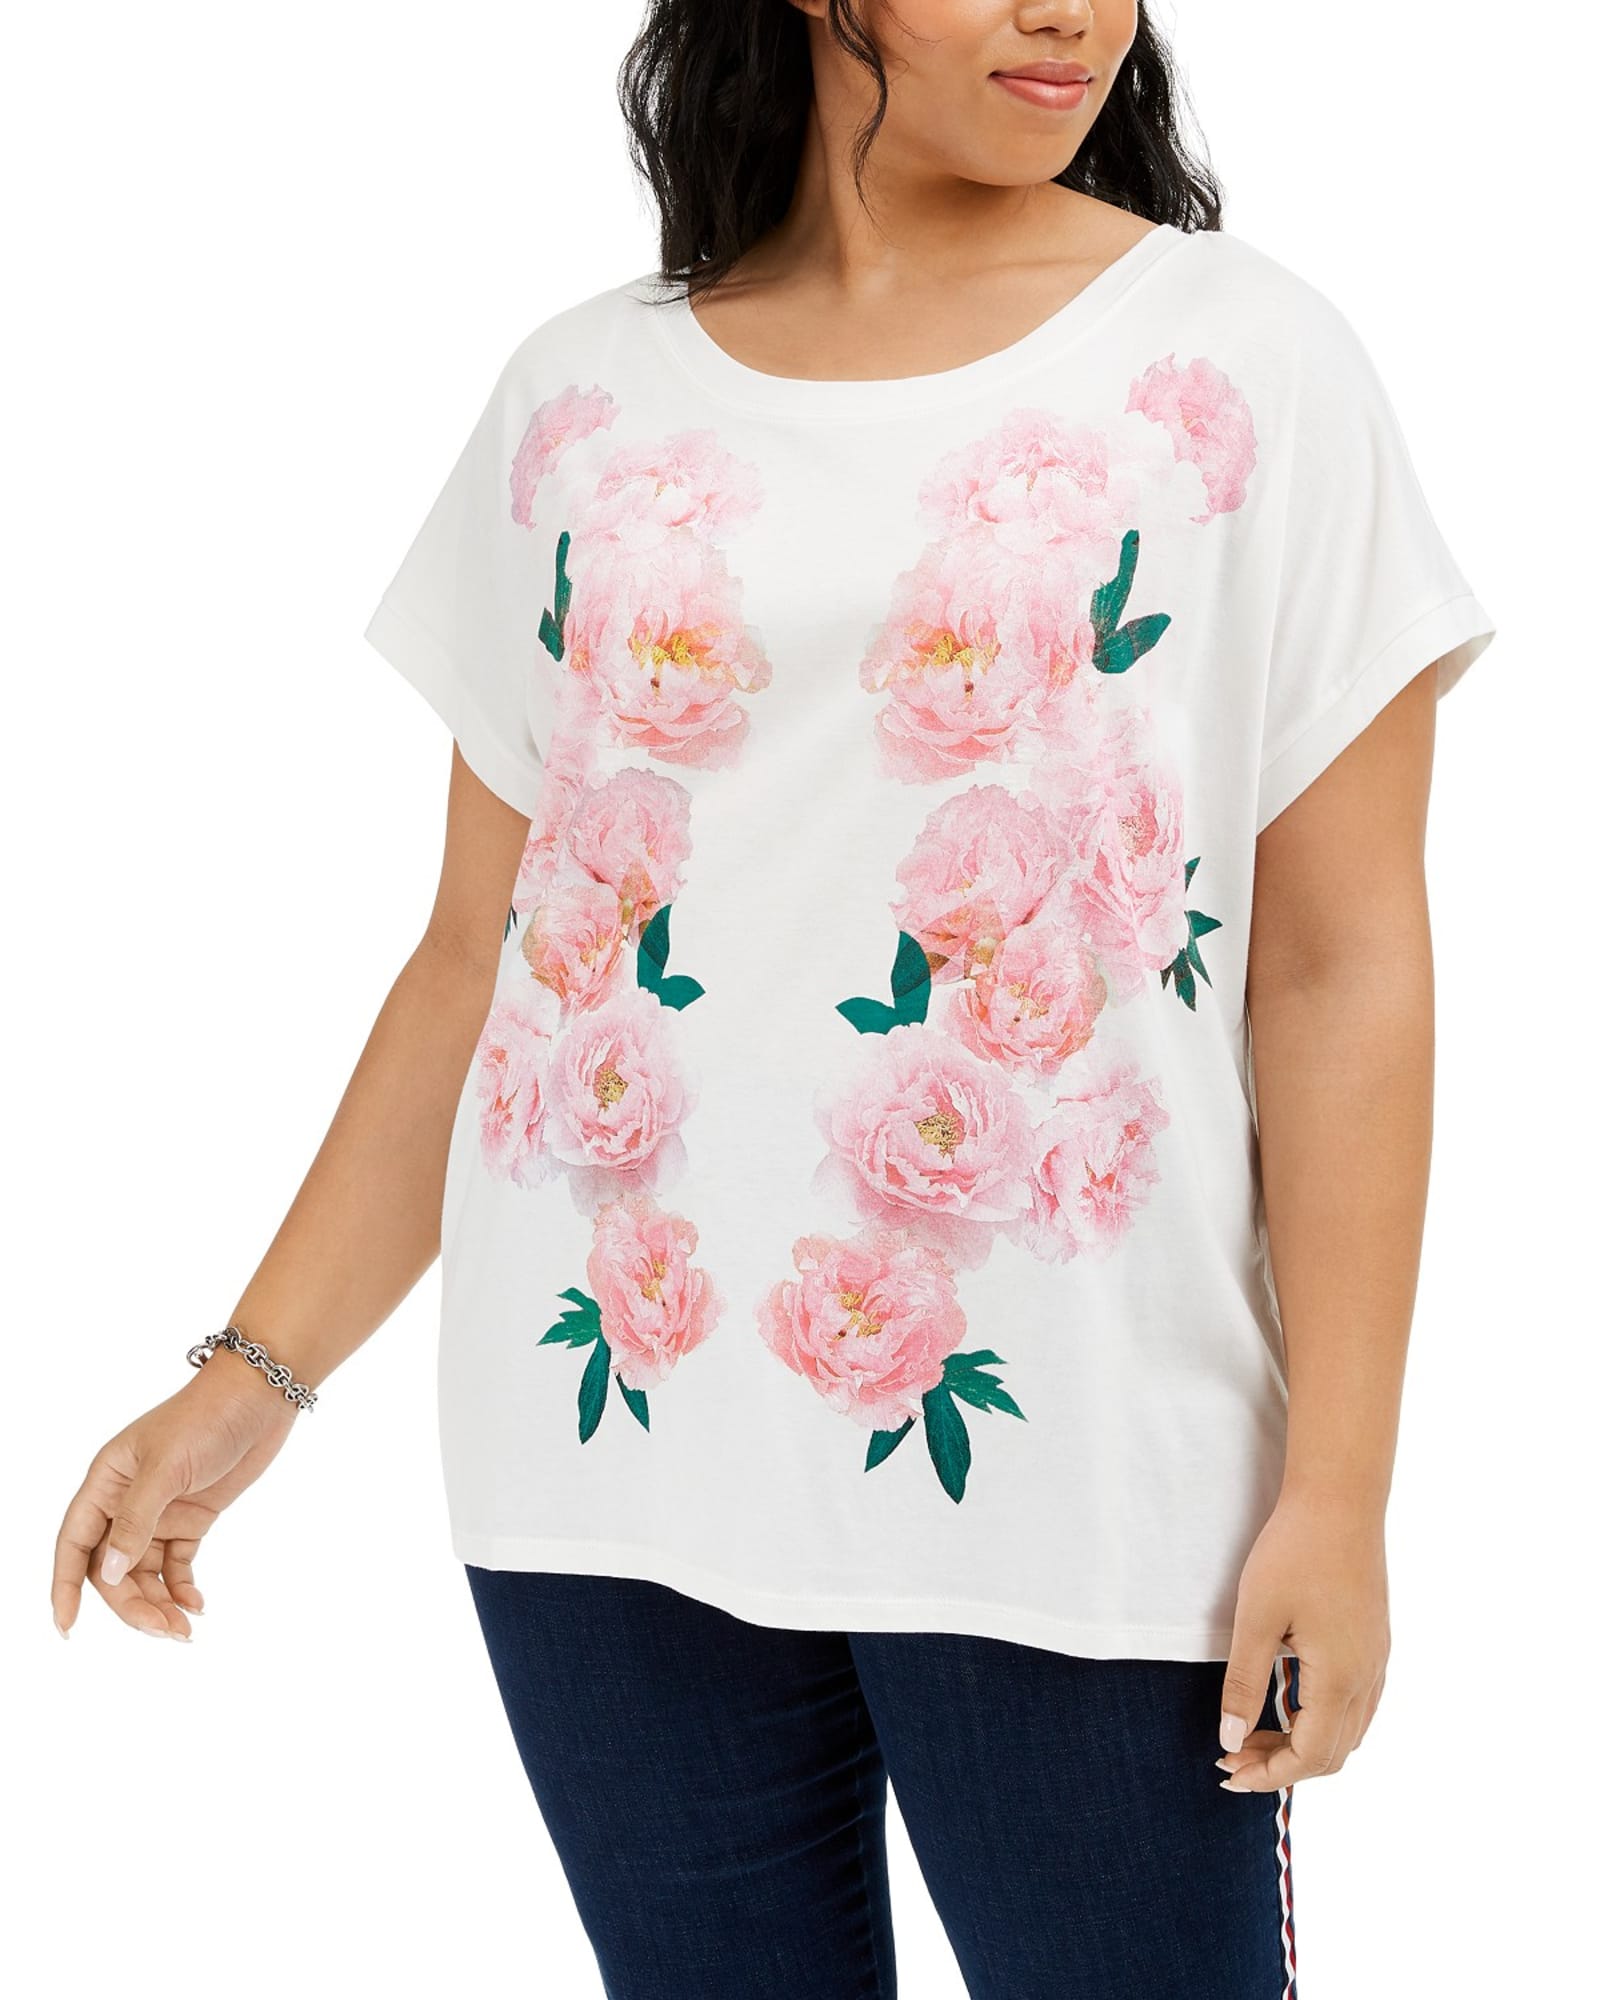 Fashion Bug Shirt Womens Plus Size 0X Off the Shoulder Floral